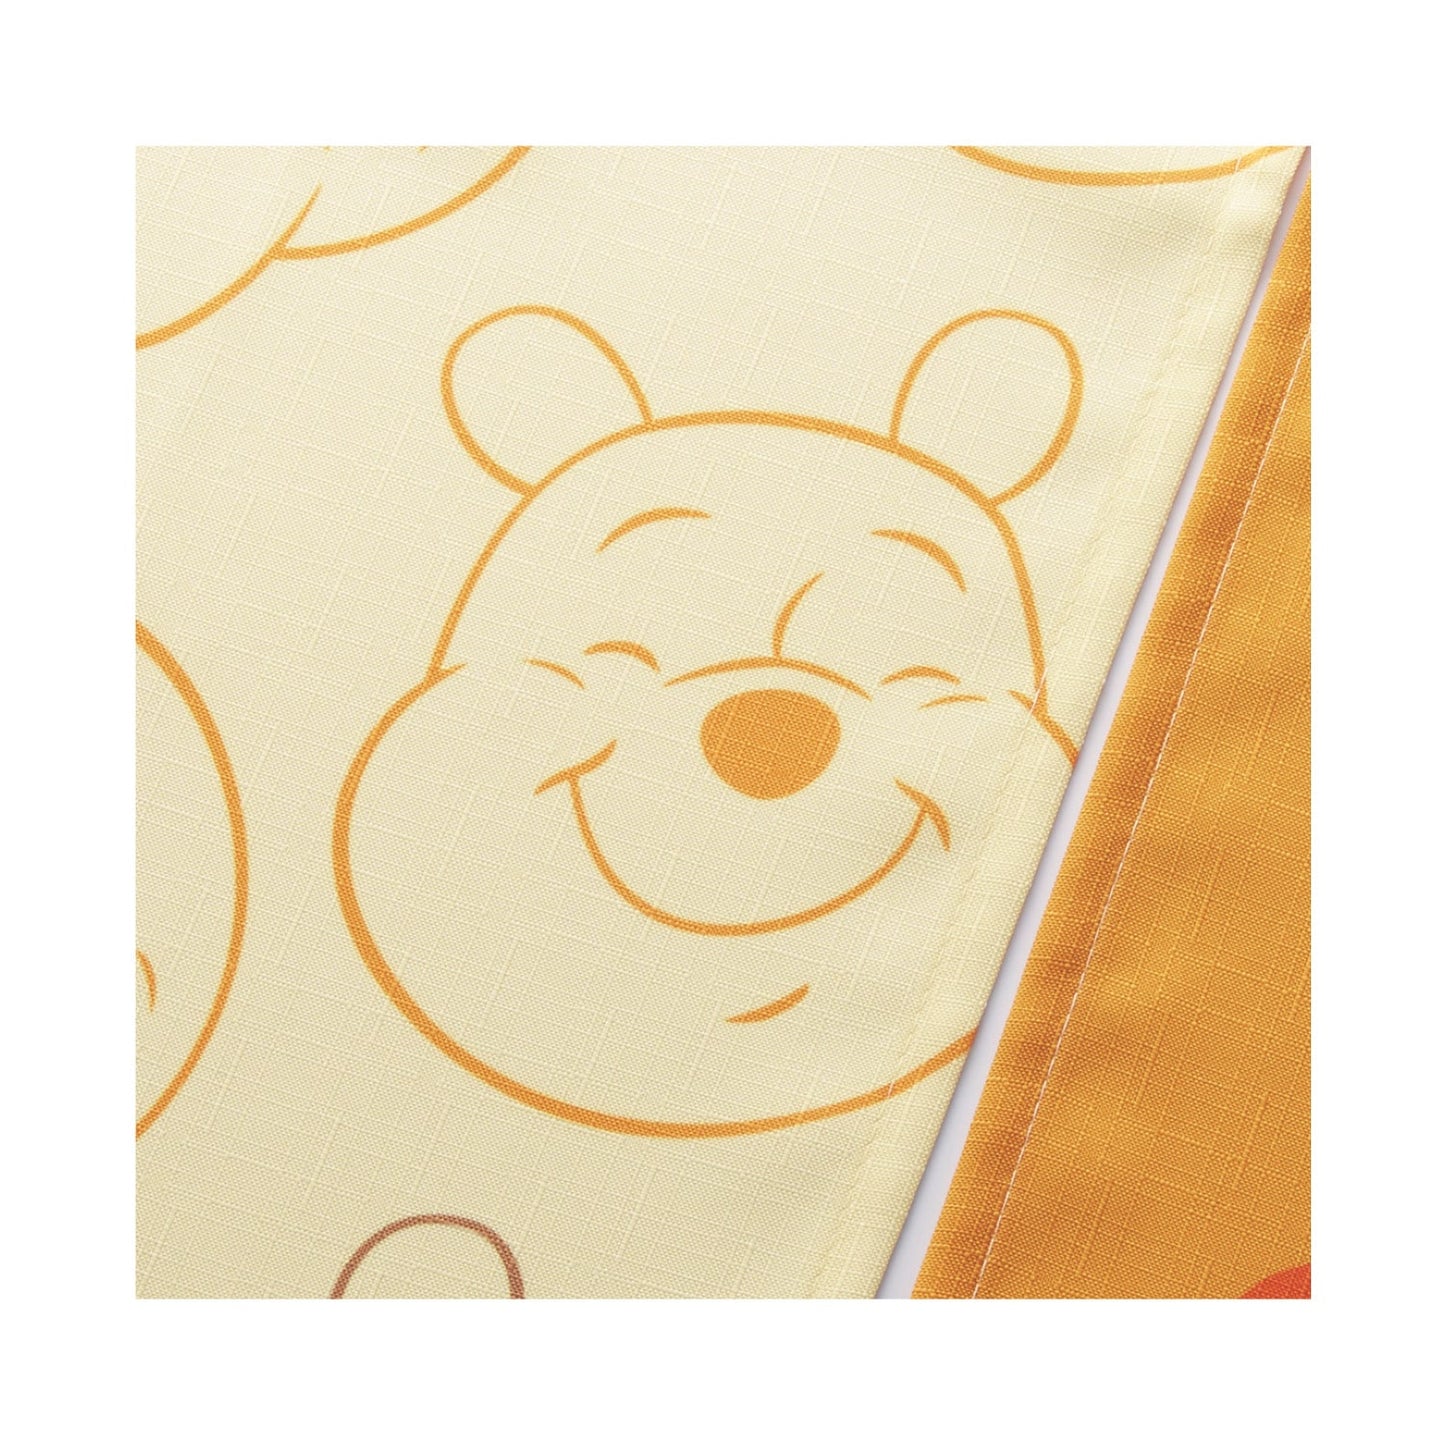  Winnie the Pooh door curtain 